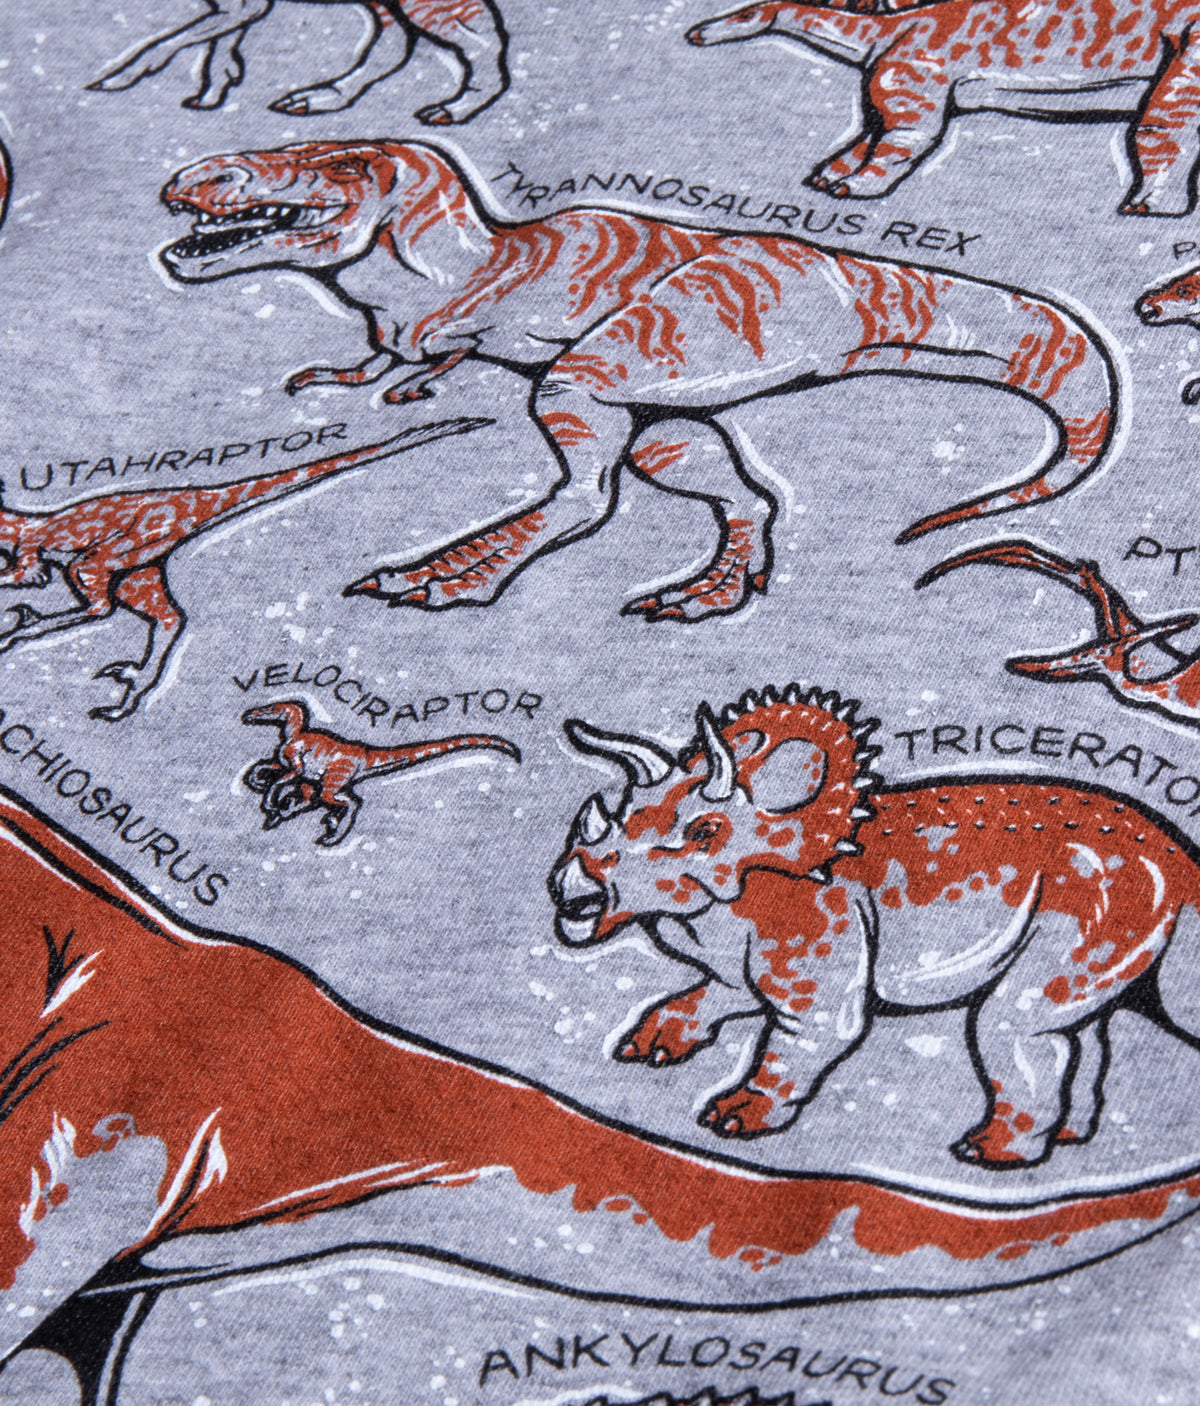 Dinosaur Species | Cool Dino Fan T-rex Raptor Boy Girl Party Child Kid's T-shirt